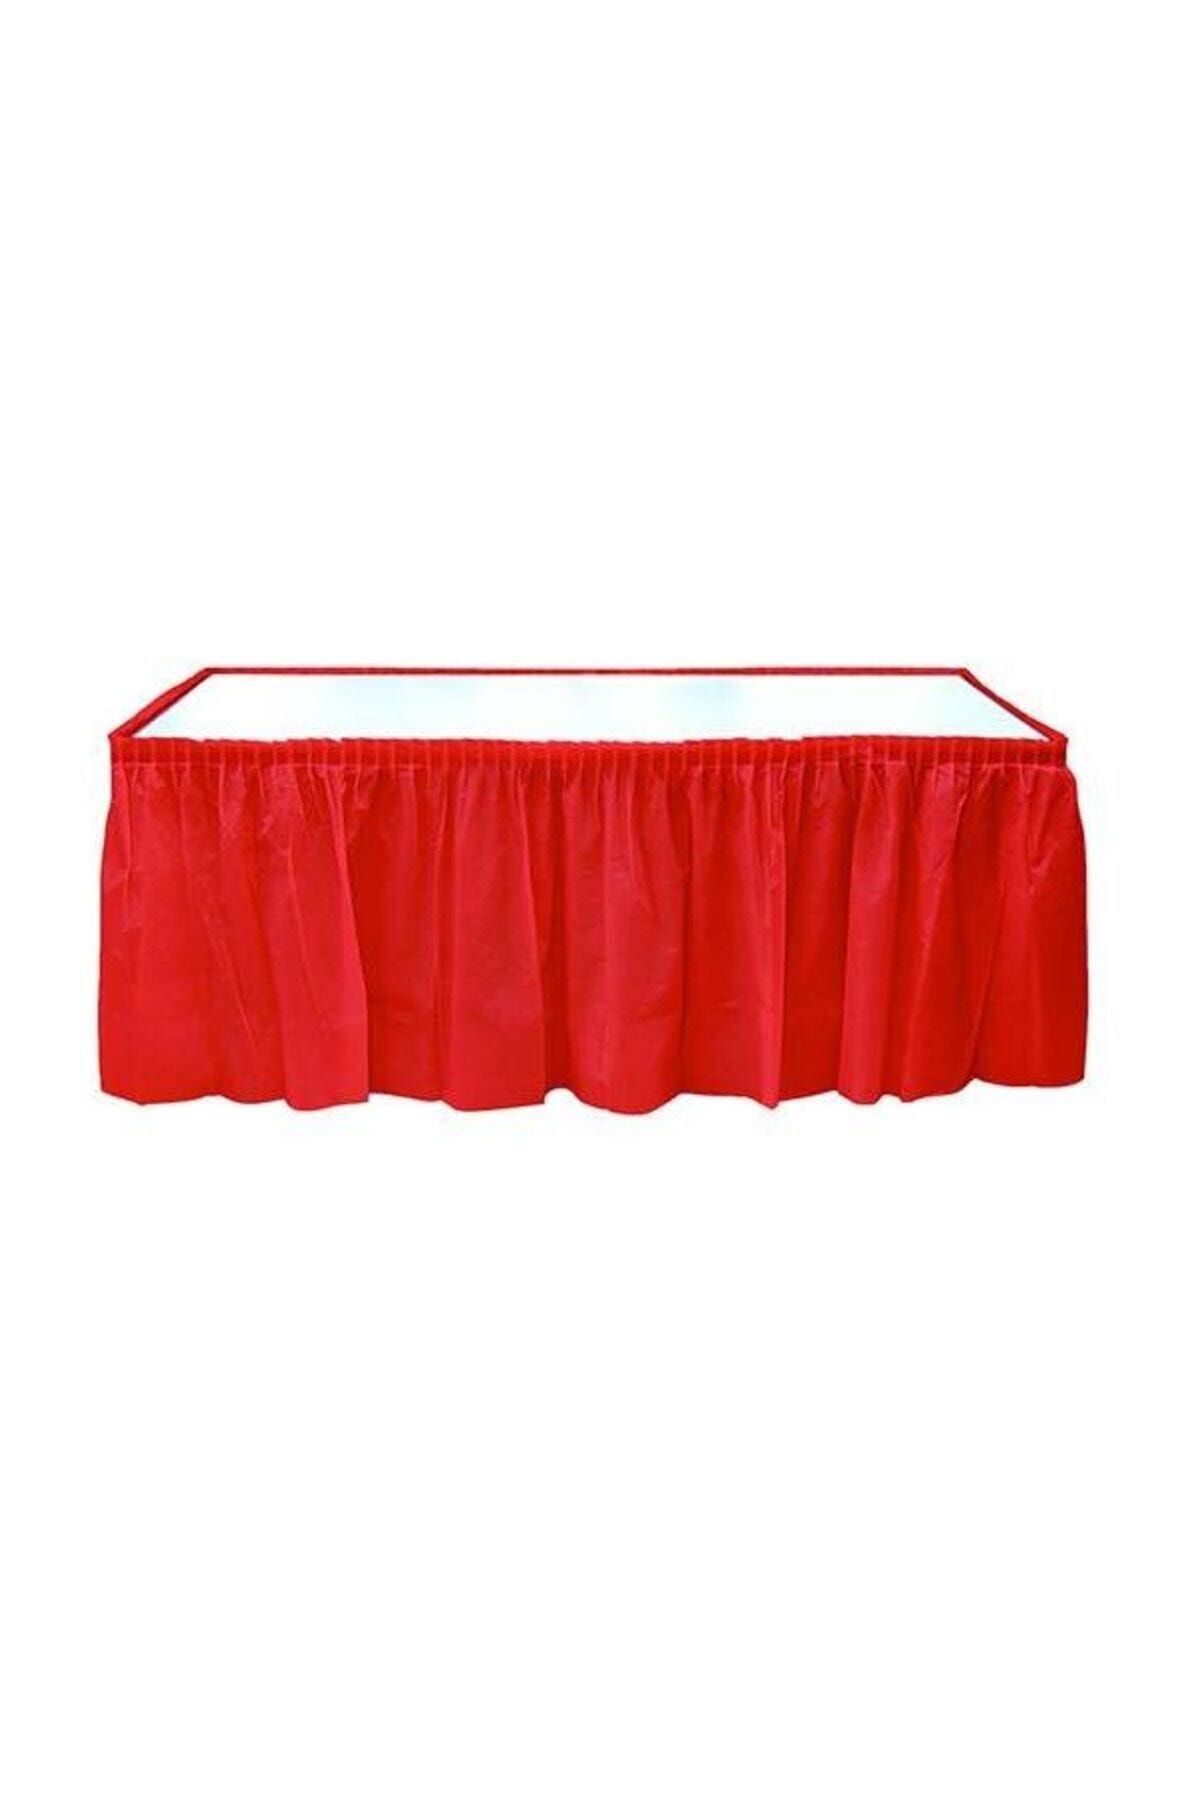 Kikajoy Kırmızı Plastik Masa Eteği 75x426 cm